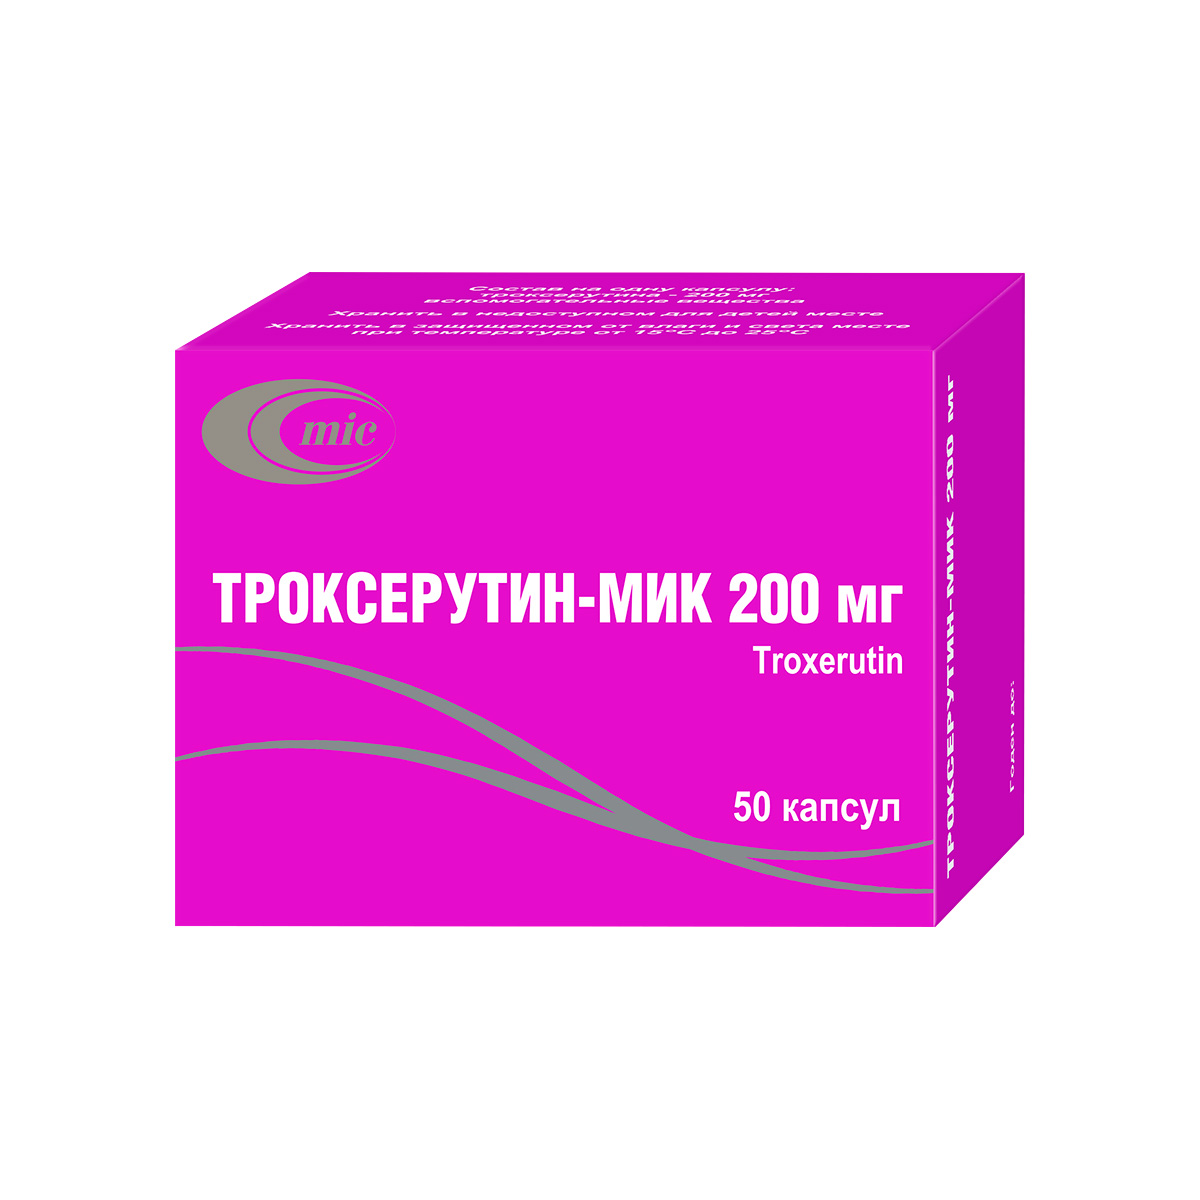 Троксерутин-МИК 200 мг капсулы 50 шт